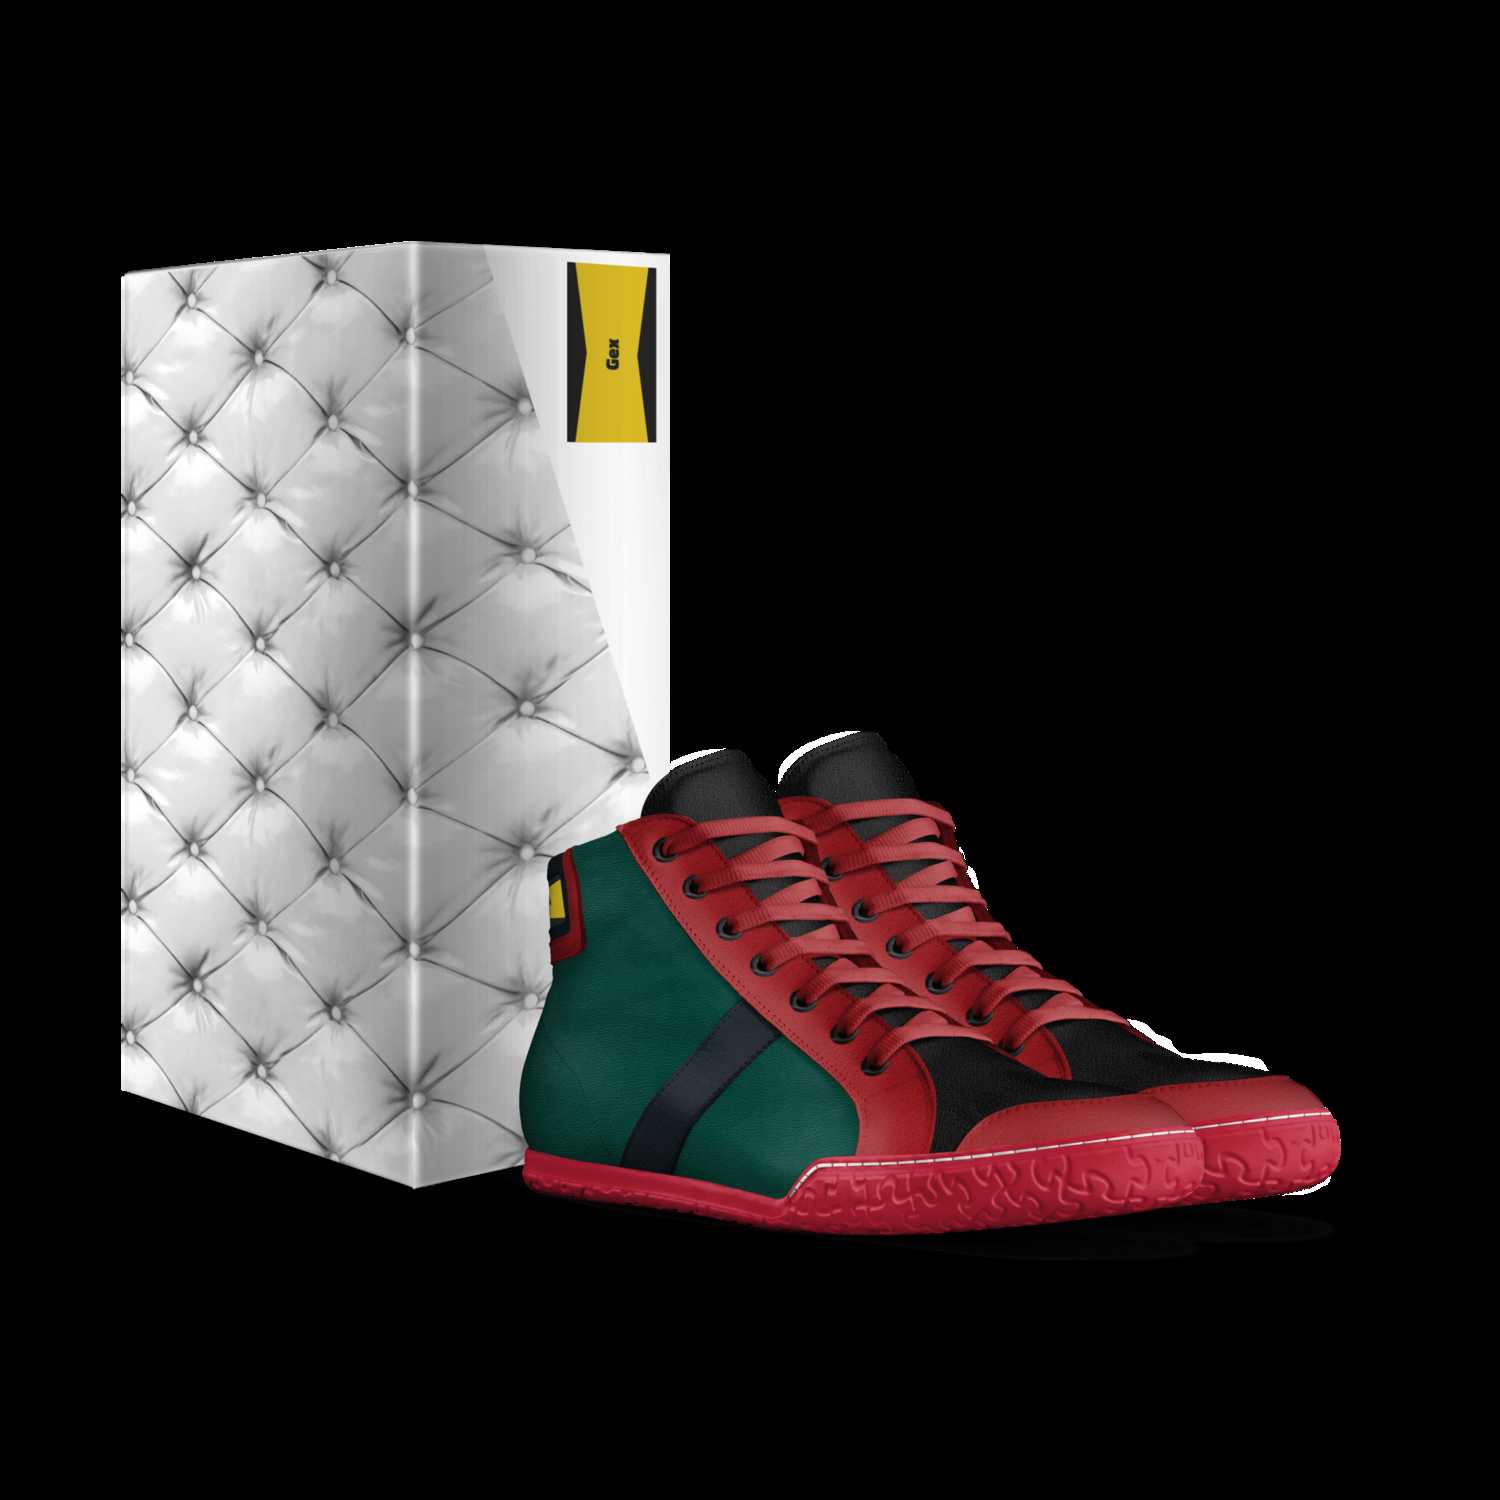 Gex | A Custom Shoe concept by Kj Spann